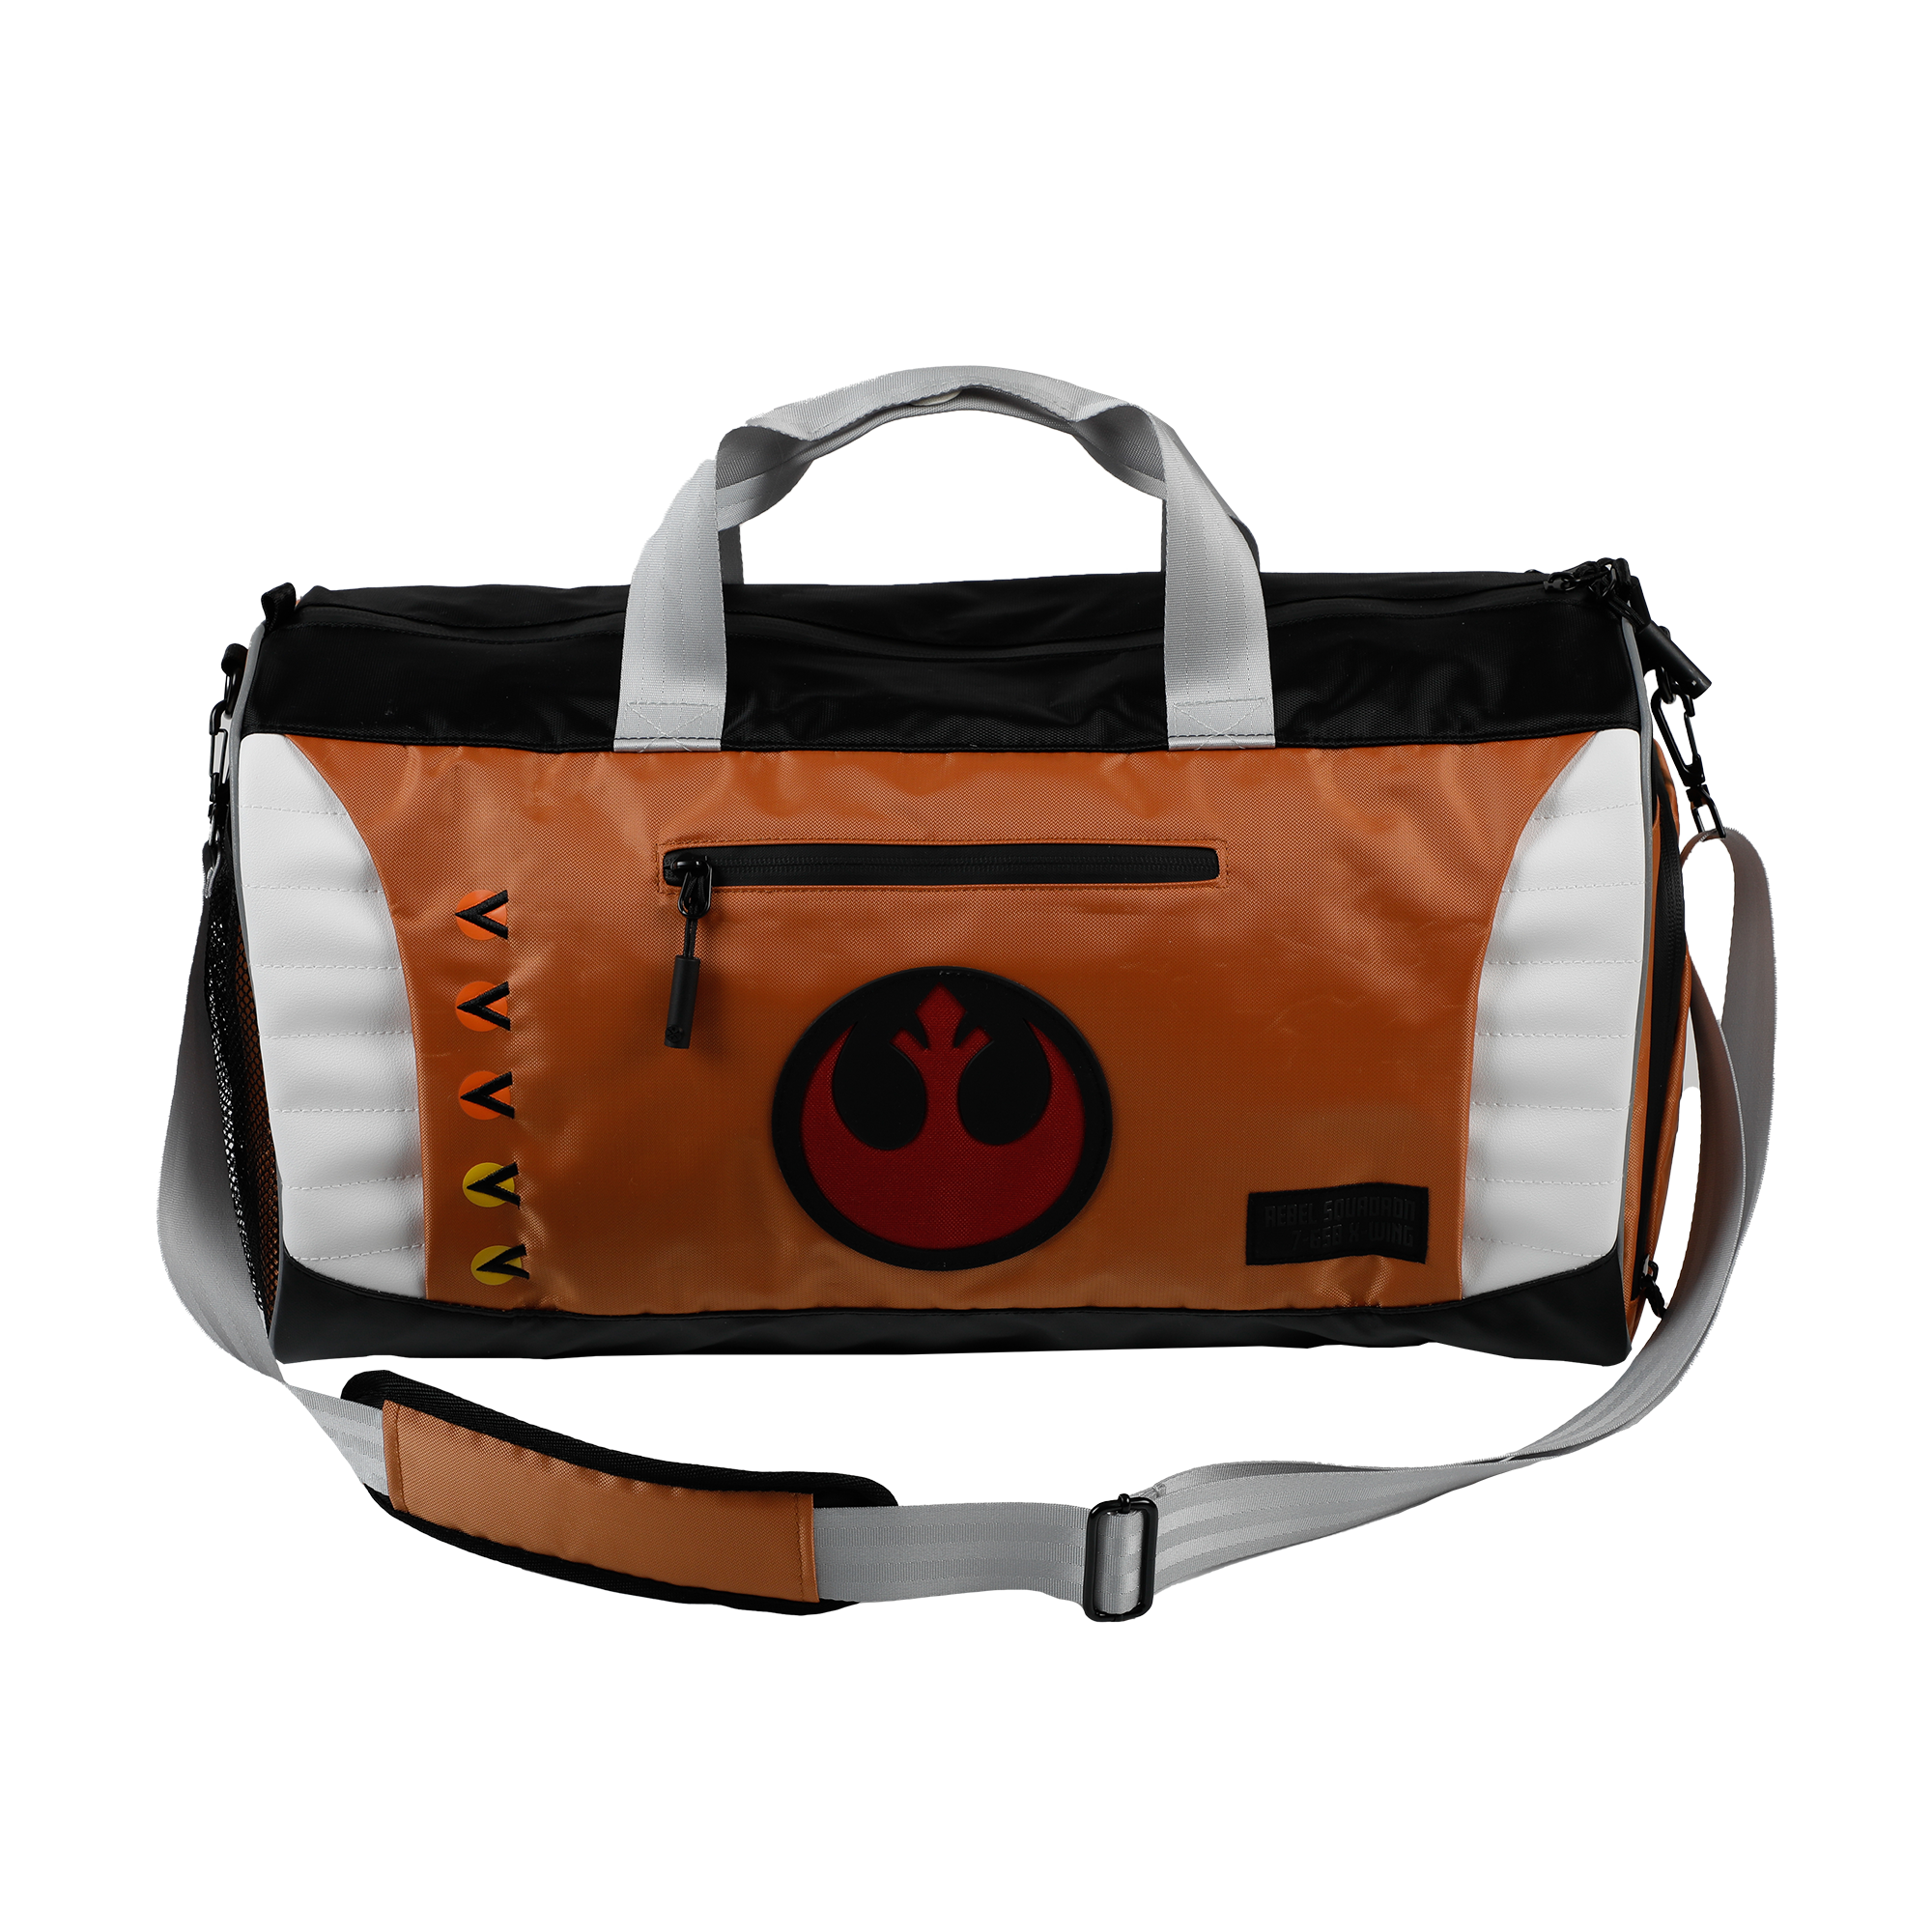 Rebel Alliance Pilot Duffle Bag